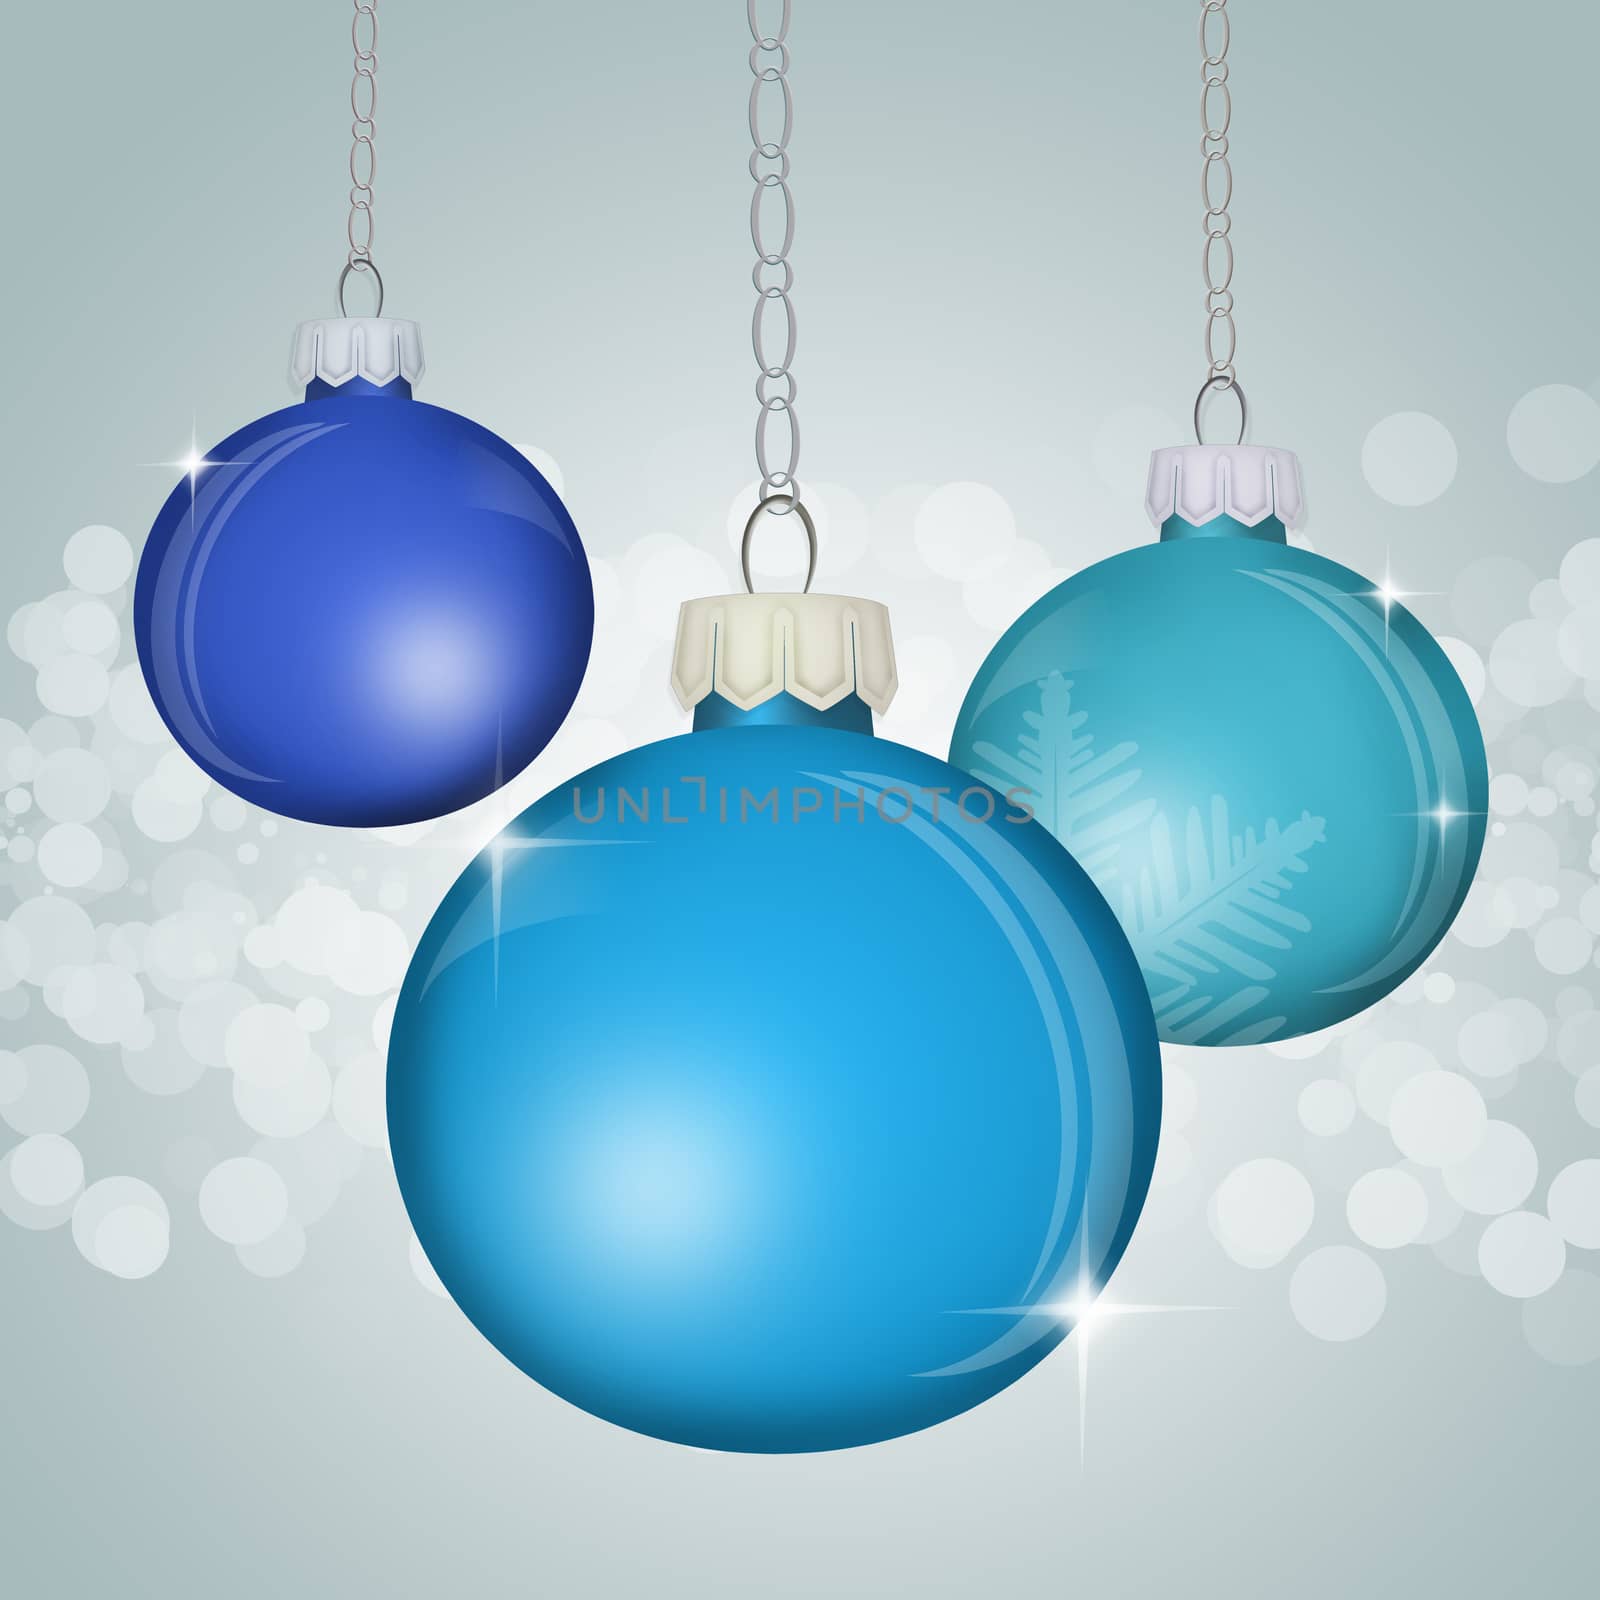 illustration of Christmas ball decorations